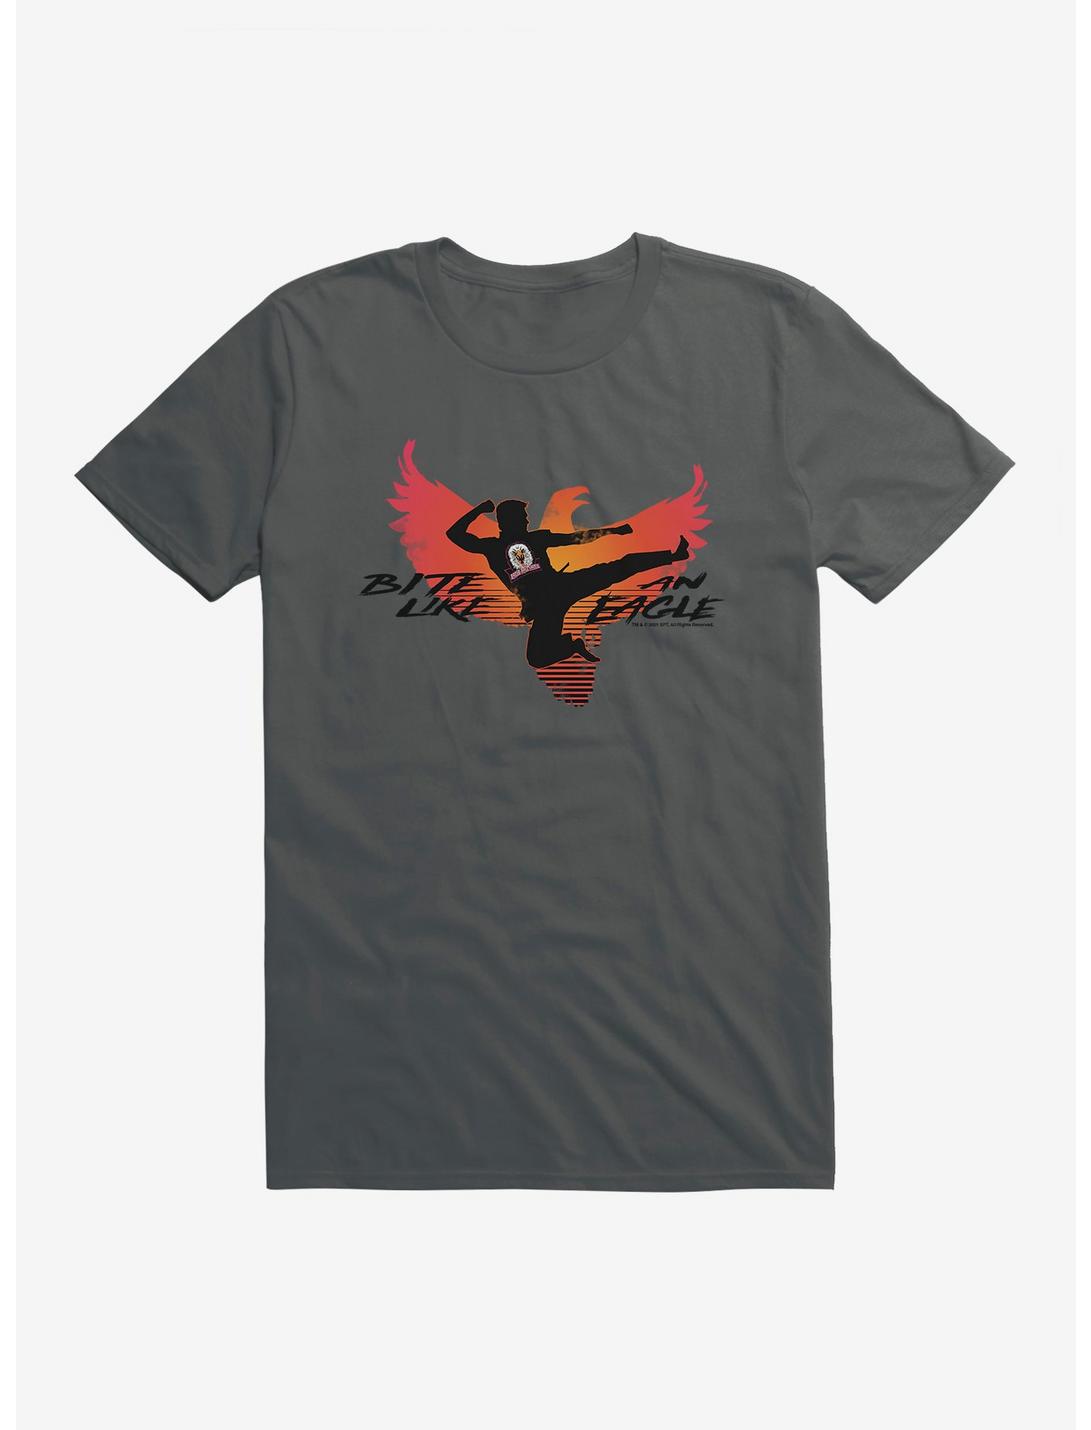 Cobra Kai Eagle Wings T-Shirt, CHARCOAL, hi-res